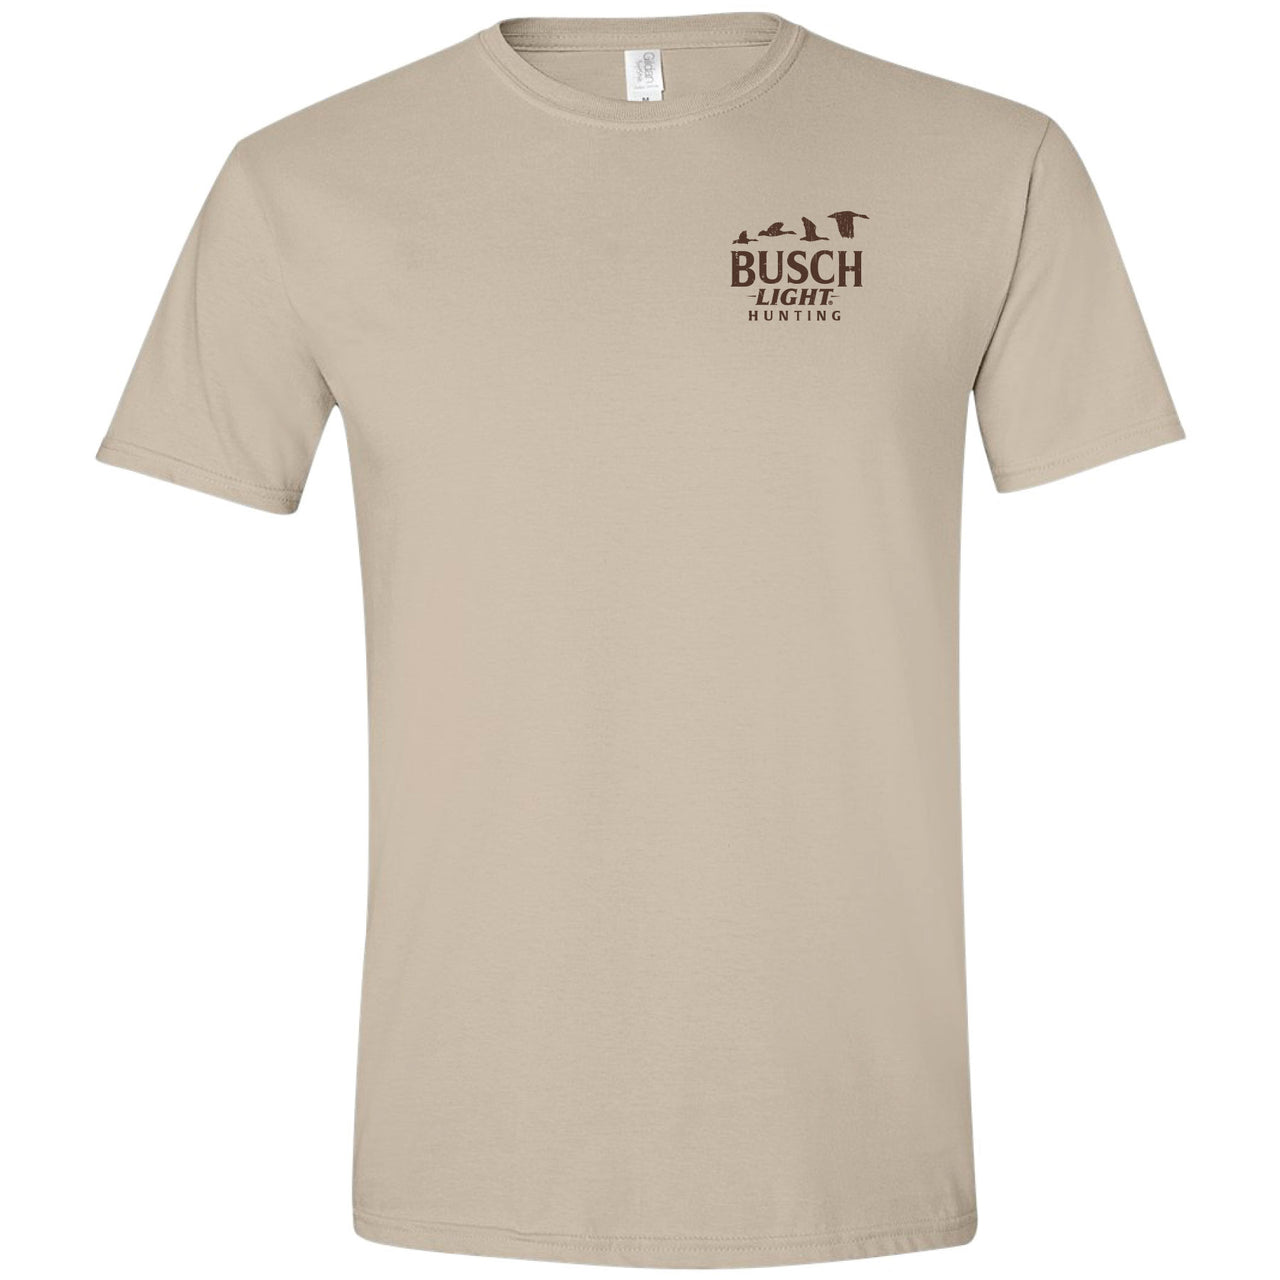 Busch Light - Hunting Dog Can Scene 2-sided T-shirt